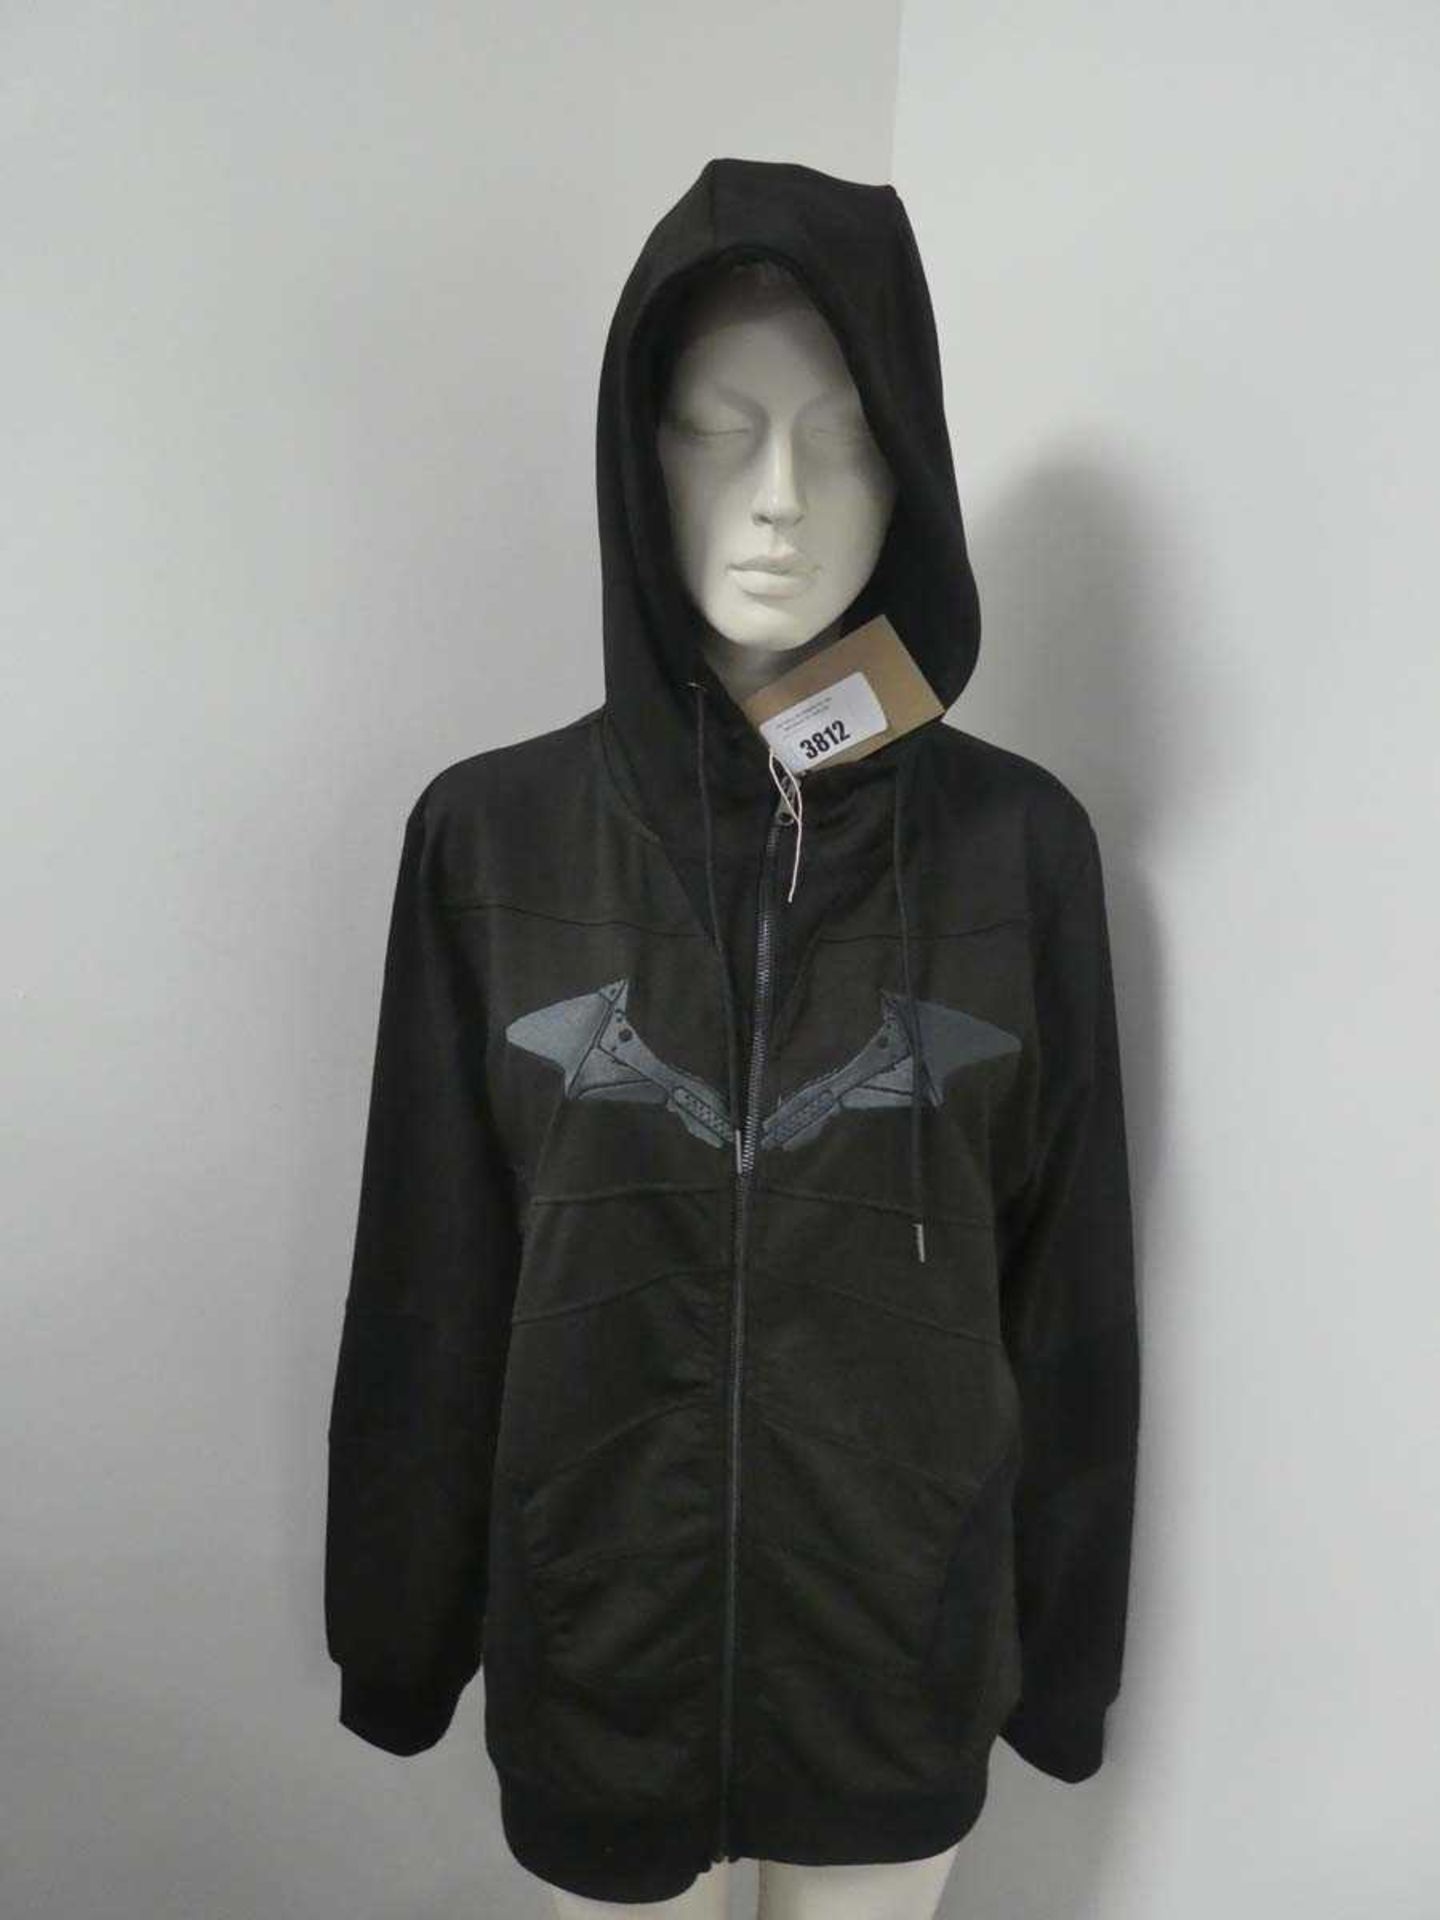 +VAT The Batman zip hoodie, size large (hanging)